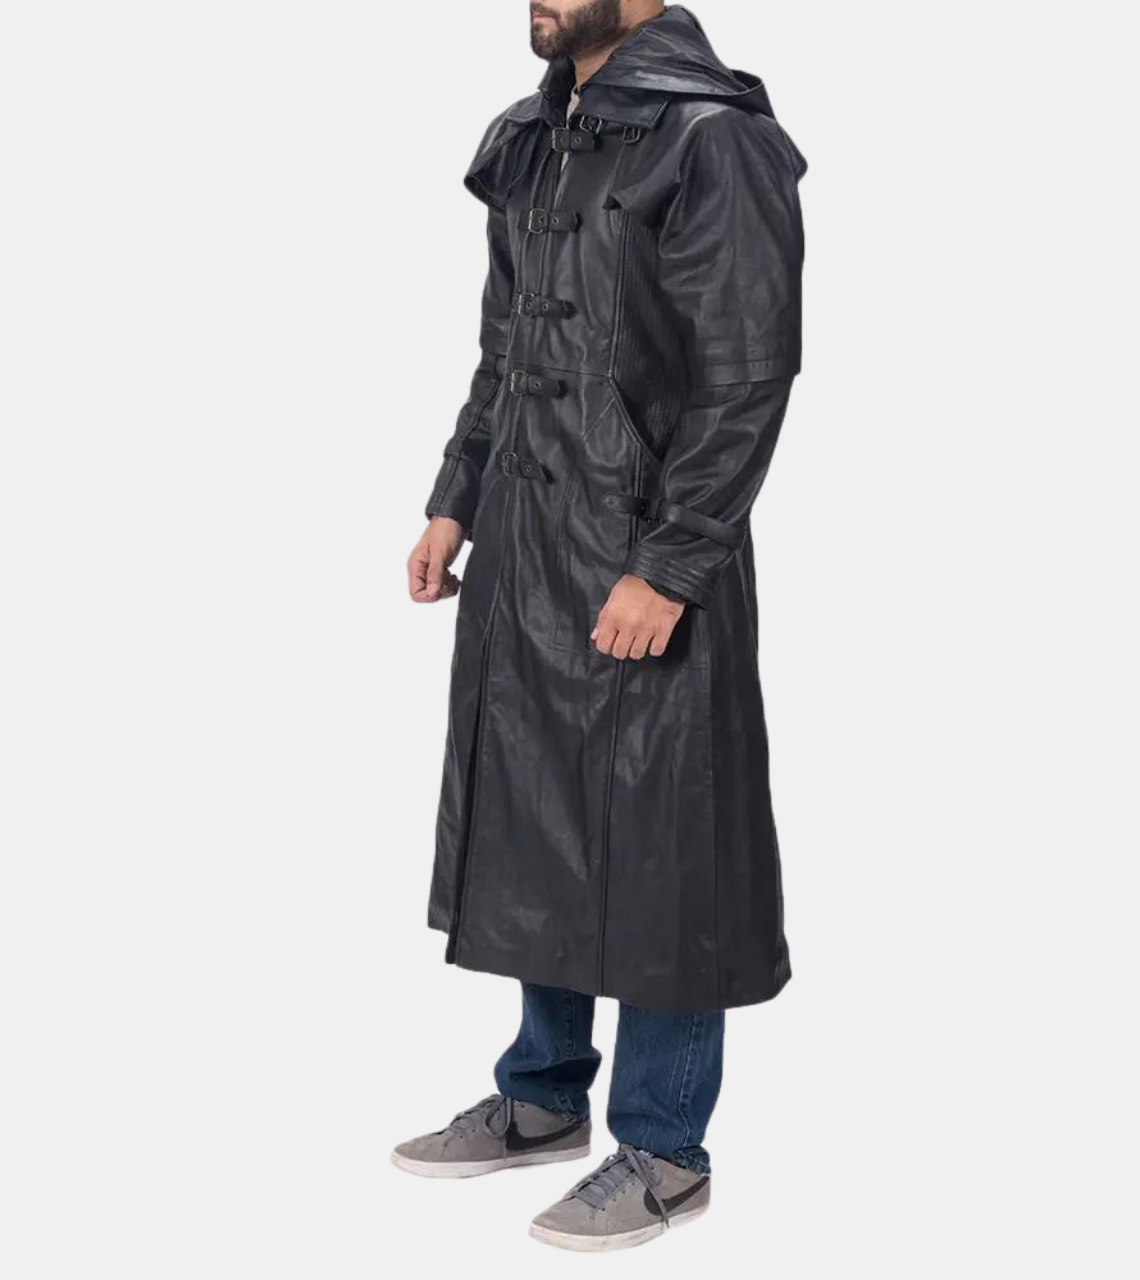 Men's Black Hooded Leather Coat